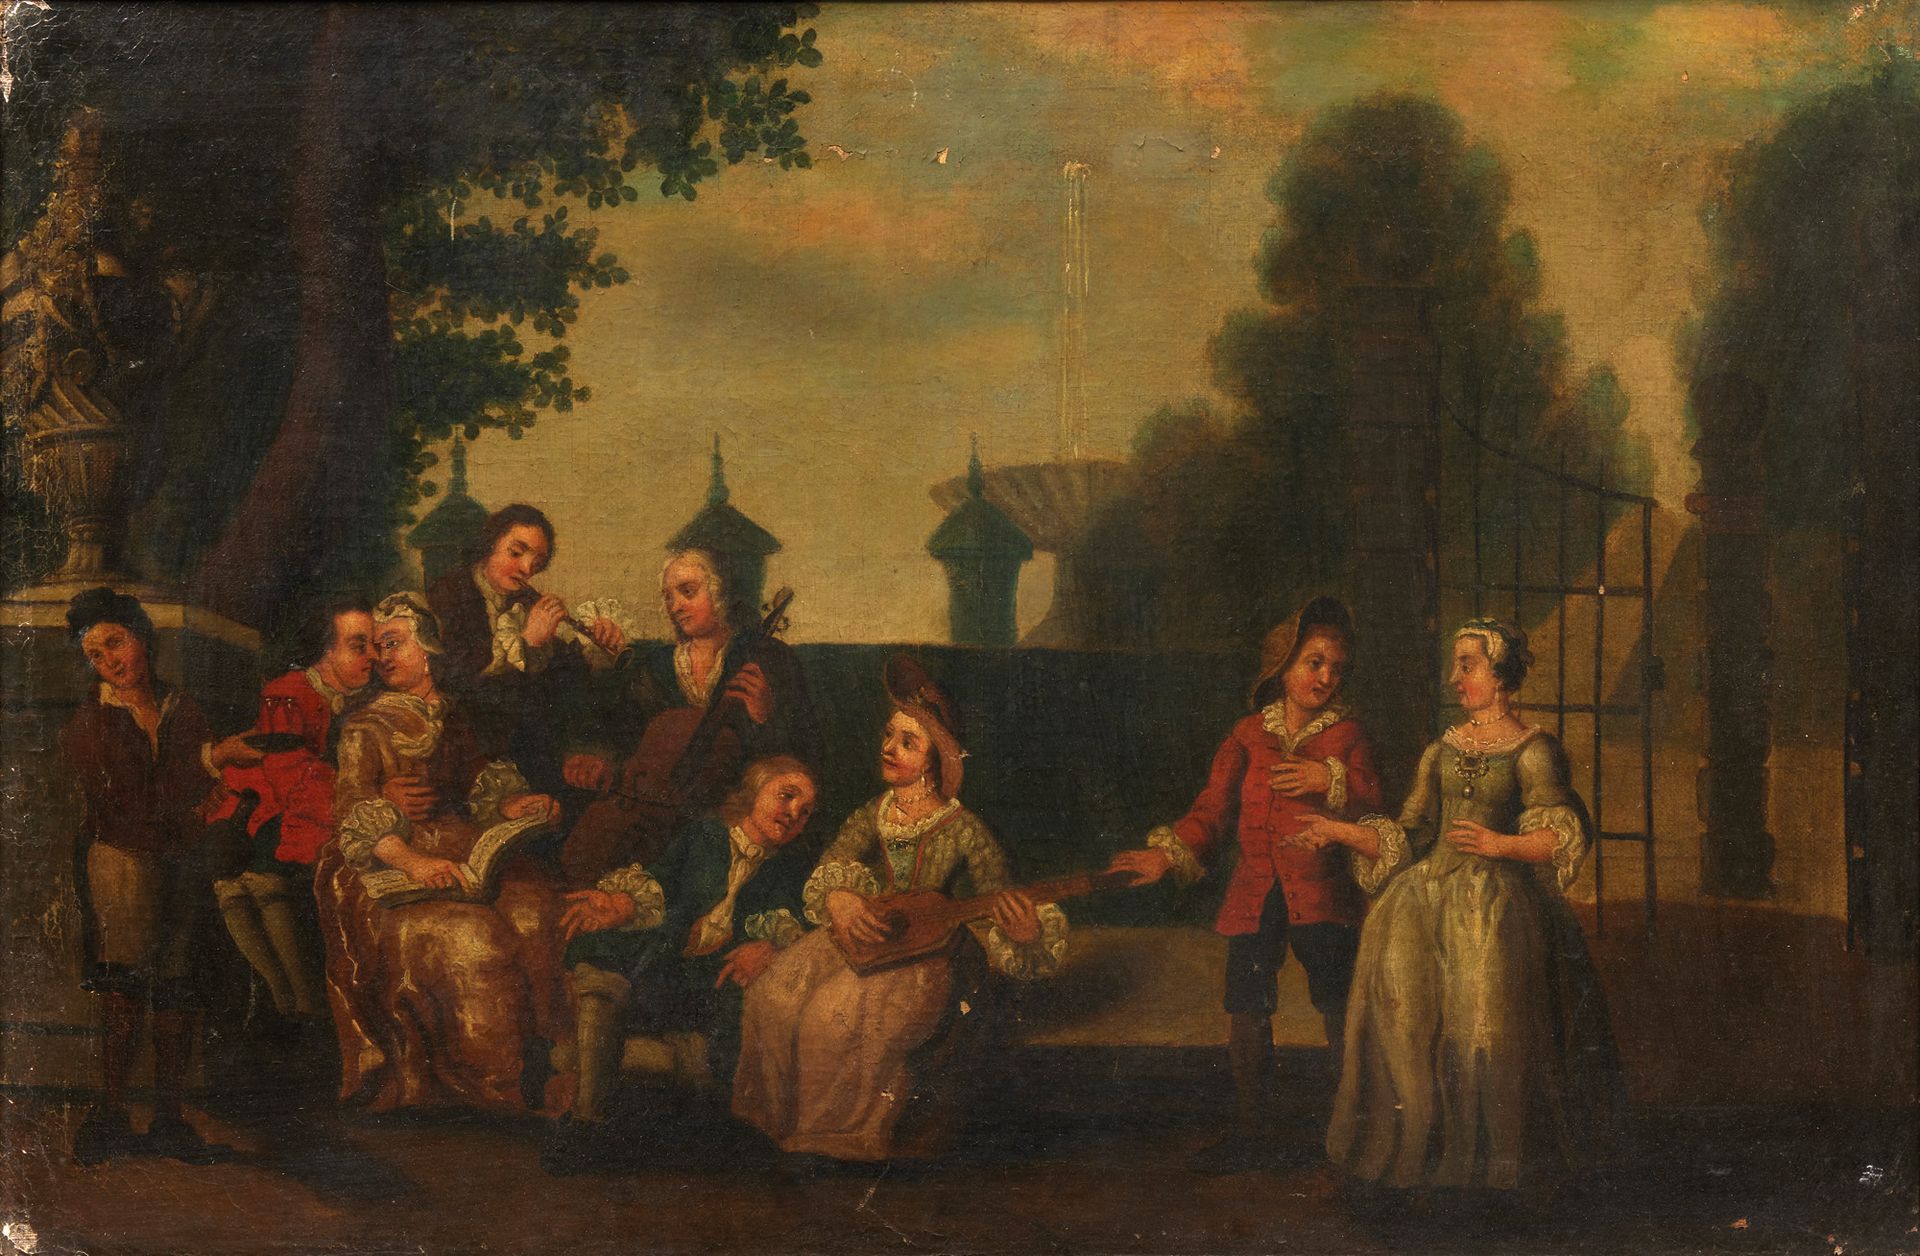 Ecole du XVIIIème siècle 18世纪的学校

音乐会

两幅布面油画组成的吊坠

44,5 x 67 cm

(损坏和缺失的部件，裂缝）。